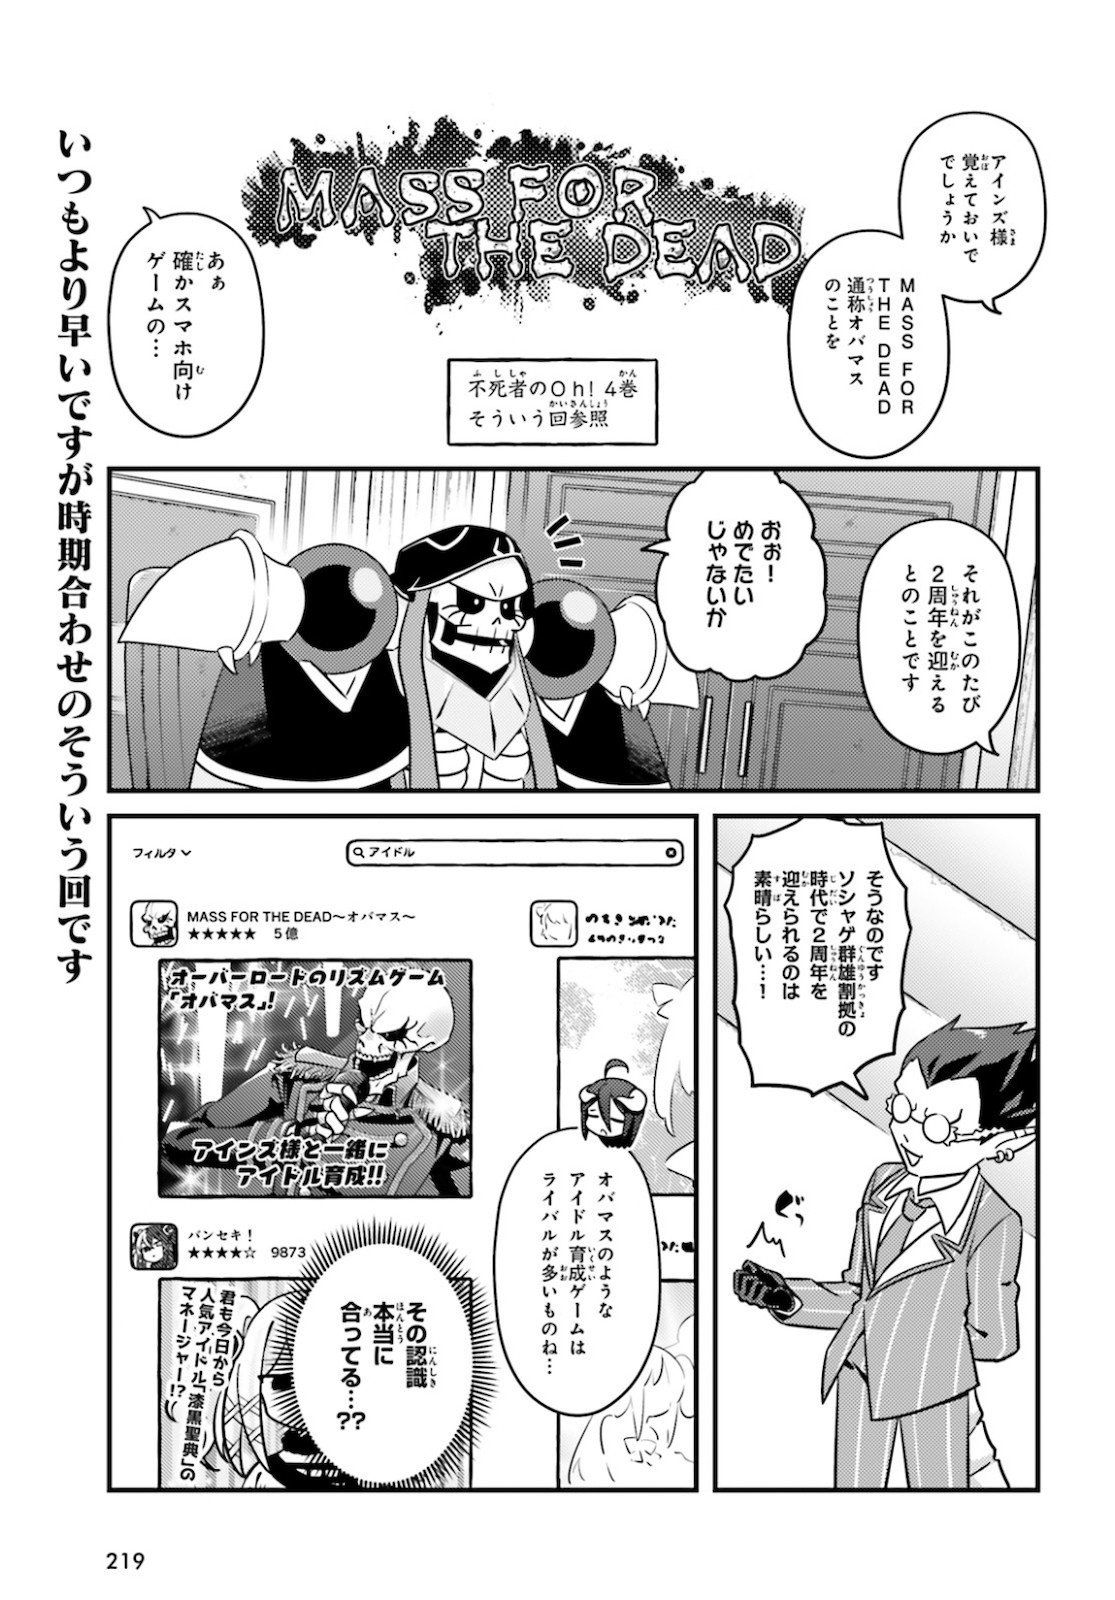 Overlord-Fushisha-no-Oh - Chapter 46 - Page 3